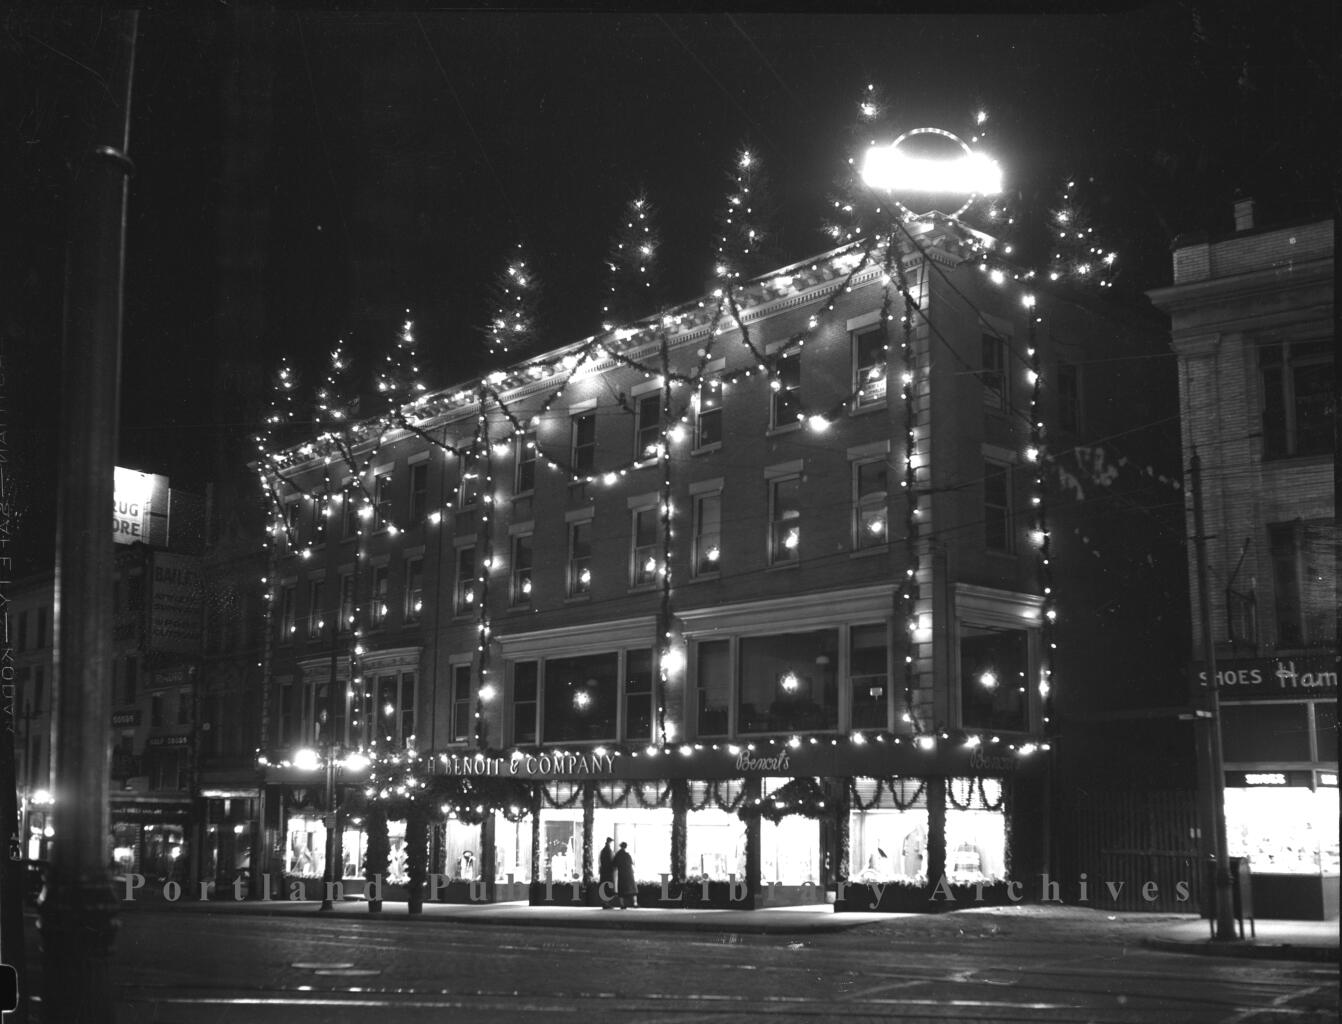 A.H. Benoit & Company (Benoit's Department Store) in 1937